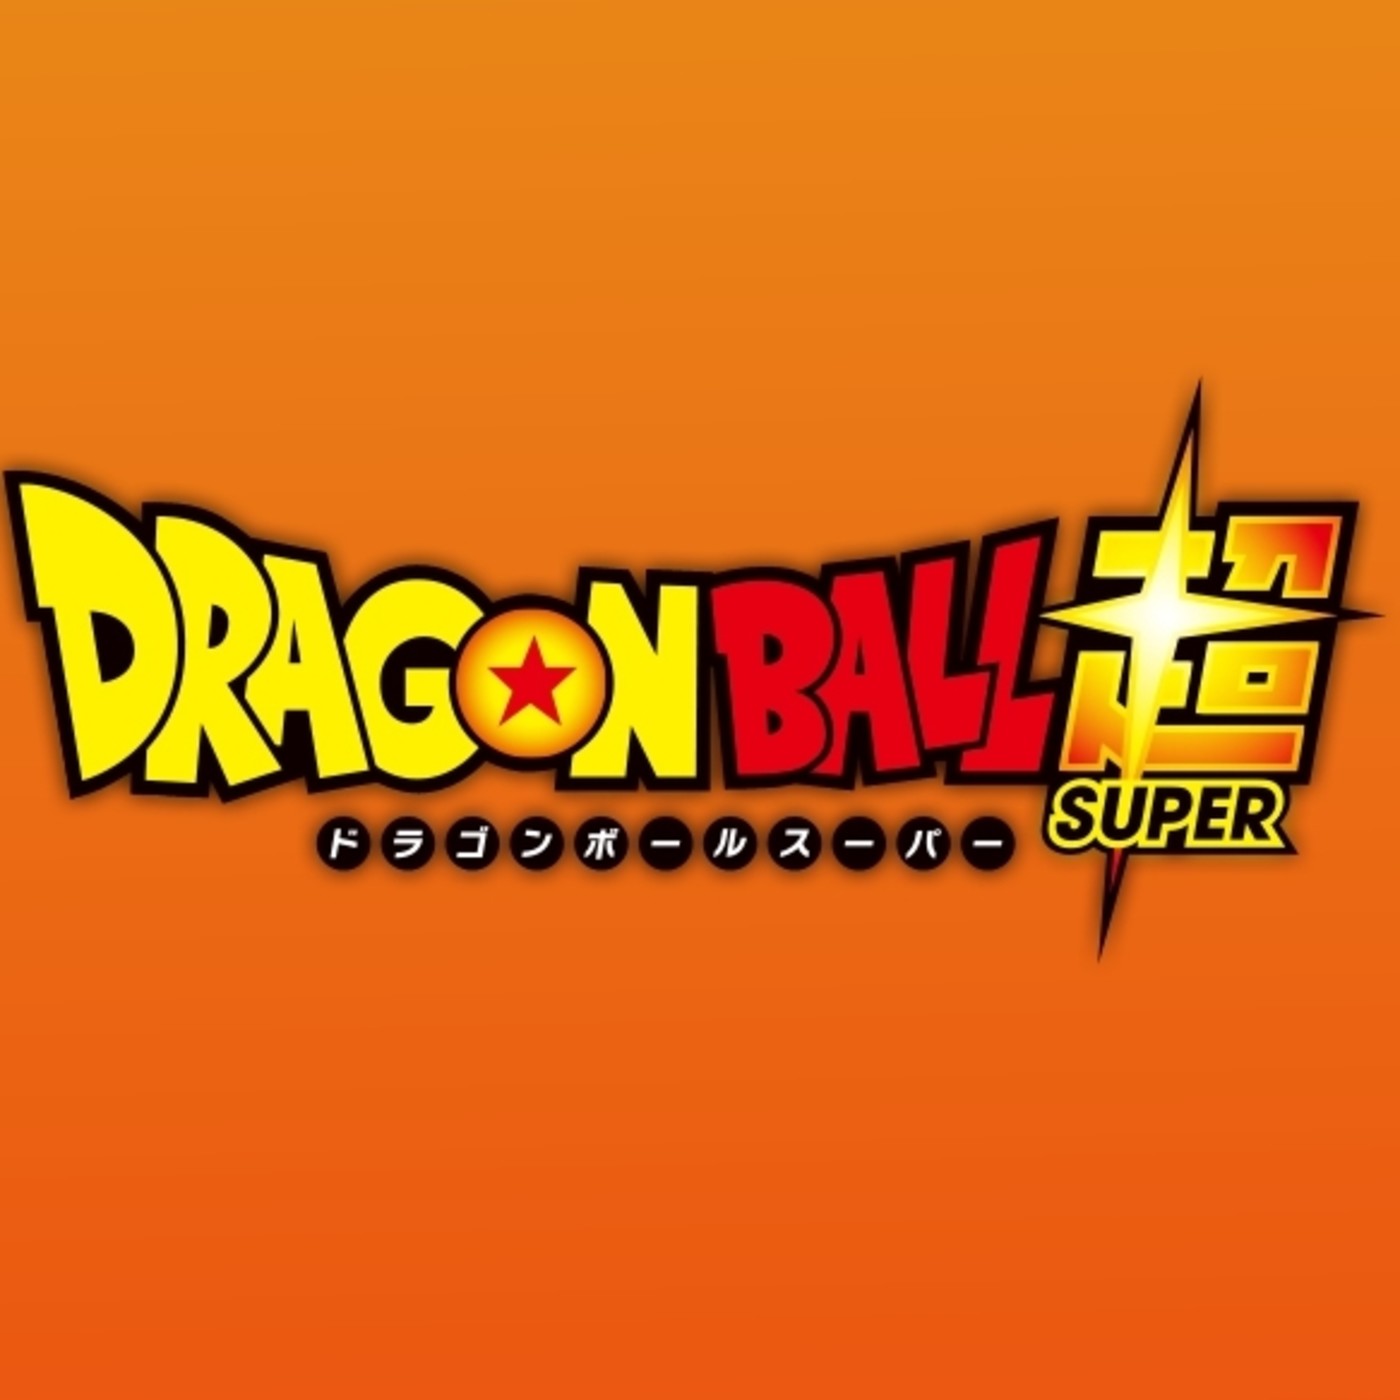 Gambatte Podcast | 'Dragon Ball Super': Ep. 22, 23 y 24 en castellano